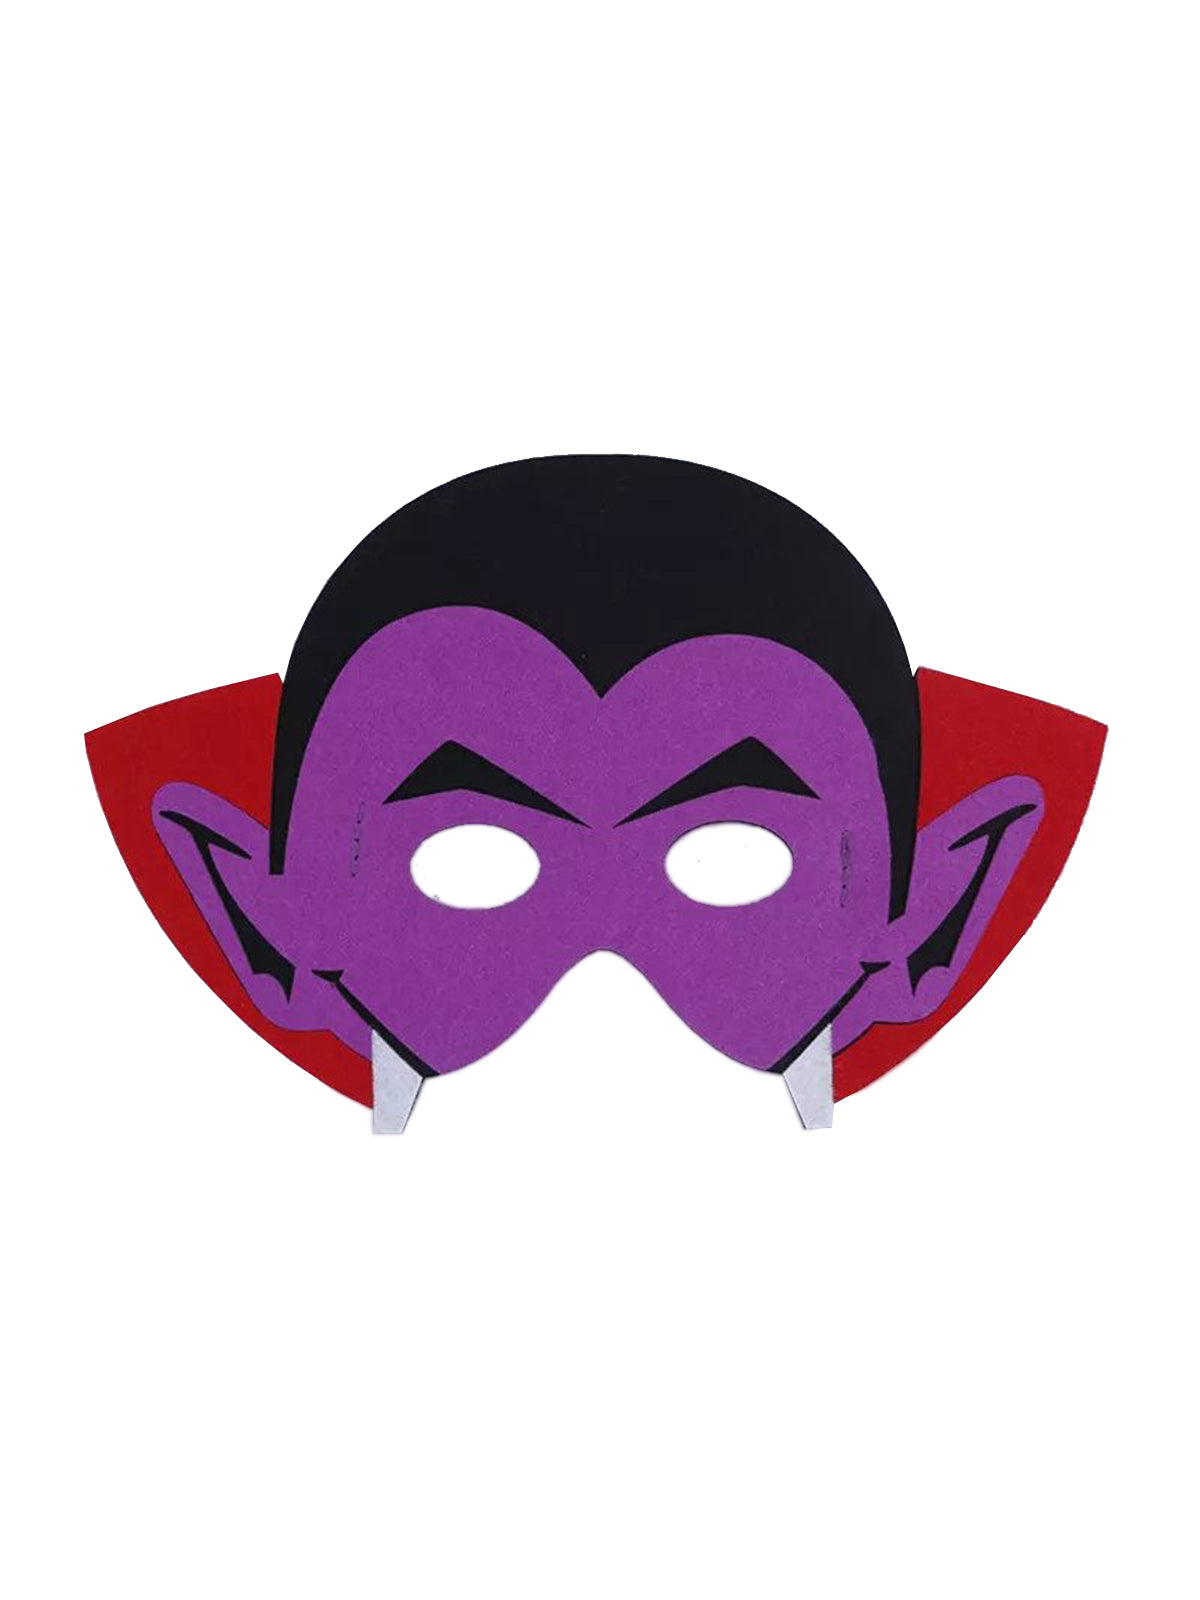 Count Draculi Mask